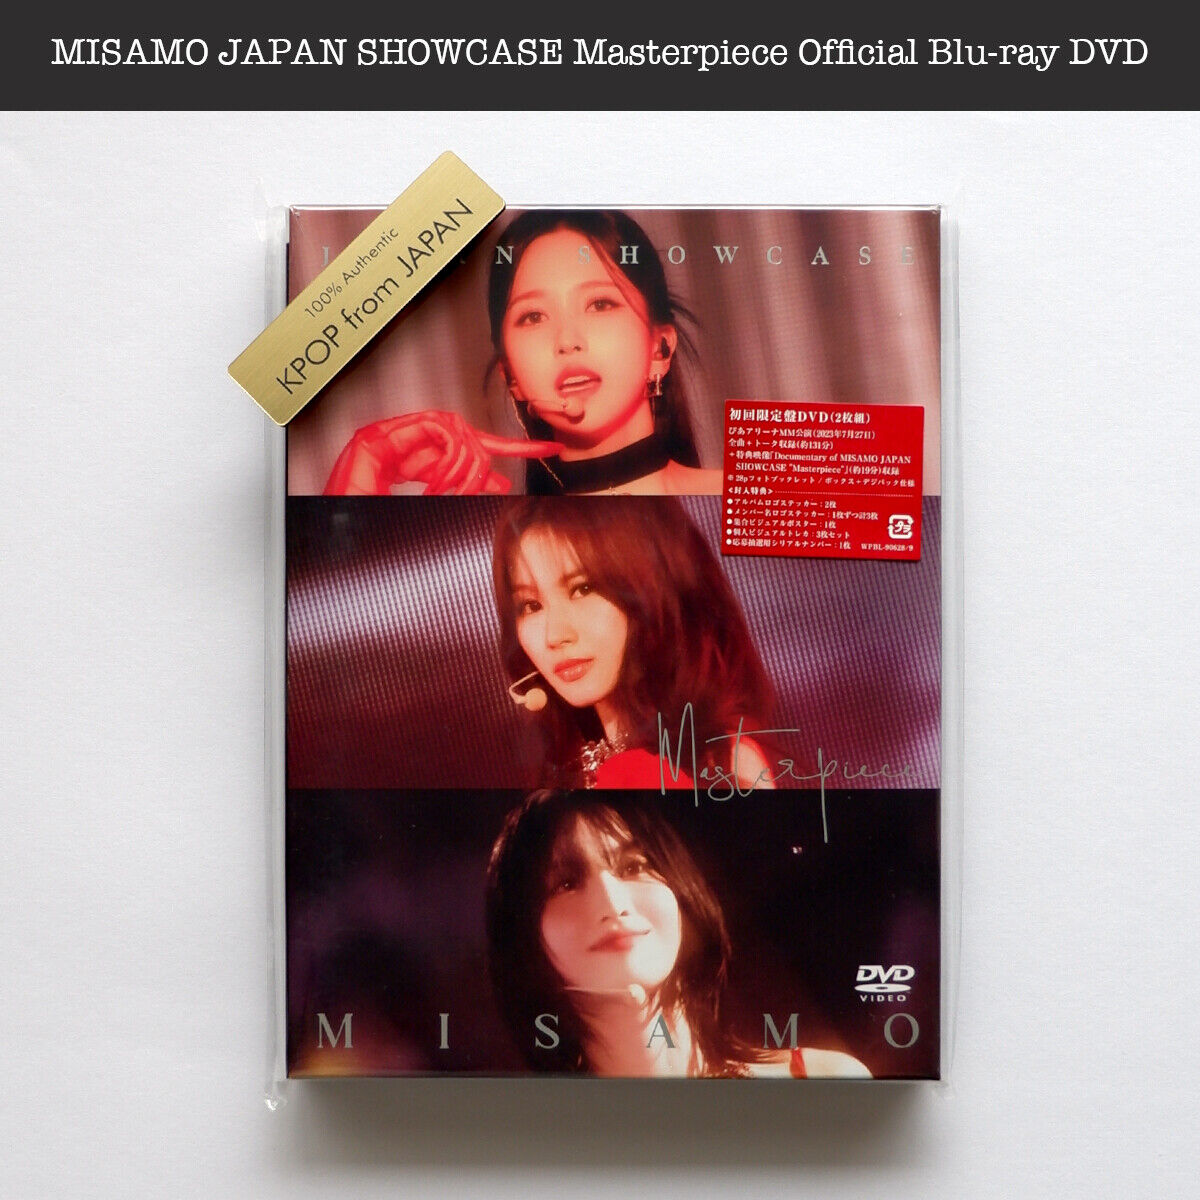 MISAMO JAPAN SHOWCASE Masterpiece Official Blu-ray DVD MINA SANA MOMO TWICE